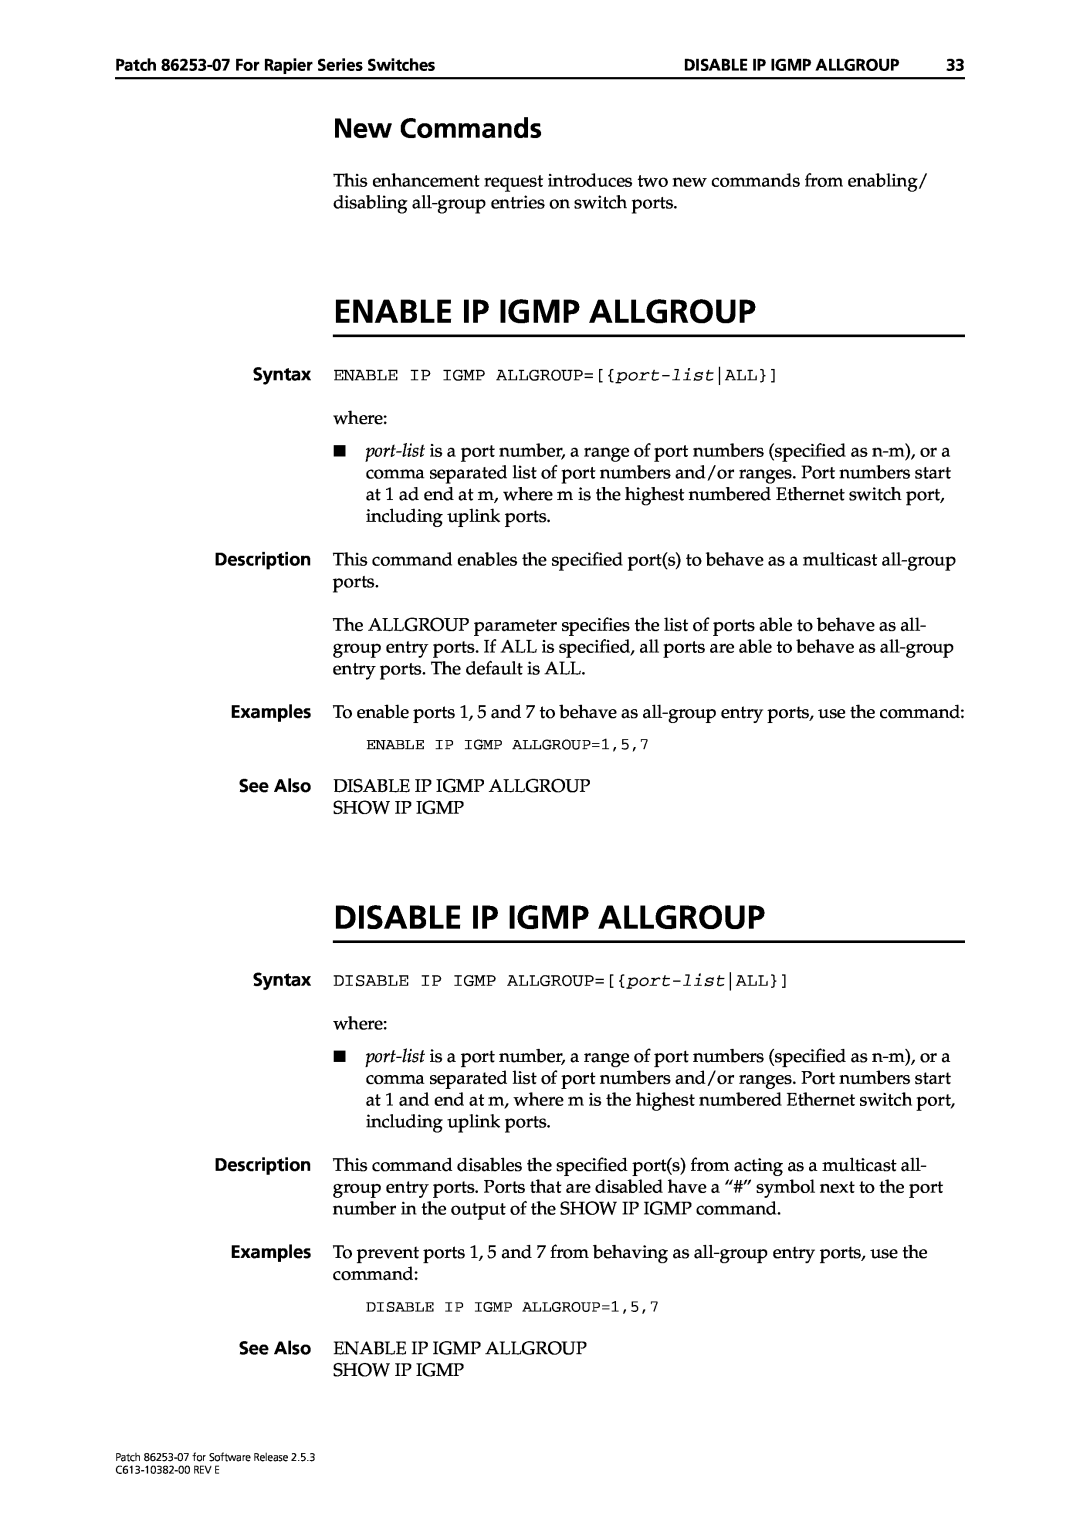 Allied Telesis 86253-07 manual Enable Ip Igmp Allgroup, Disable Ip Igmp Allgroup, New Commands 